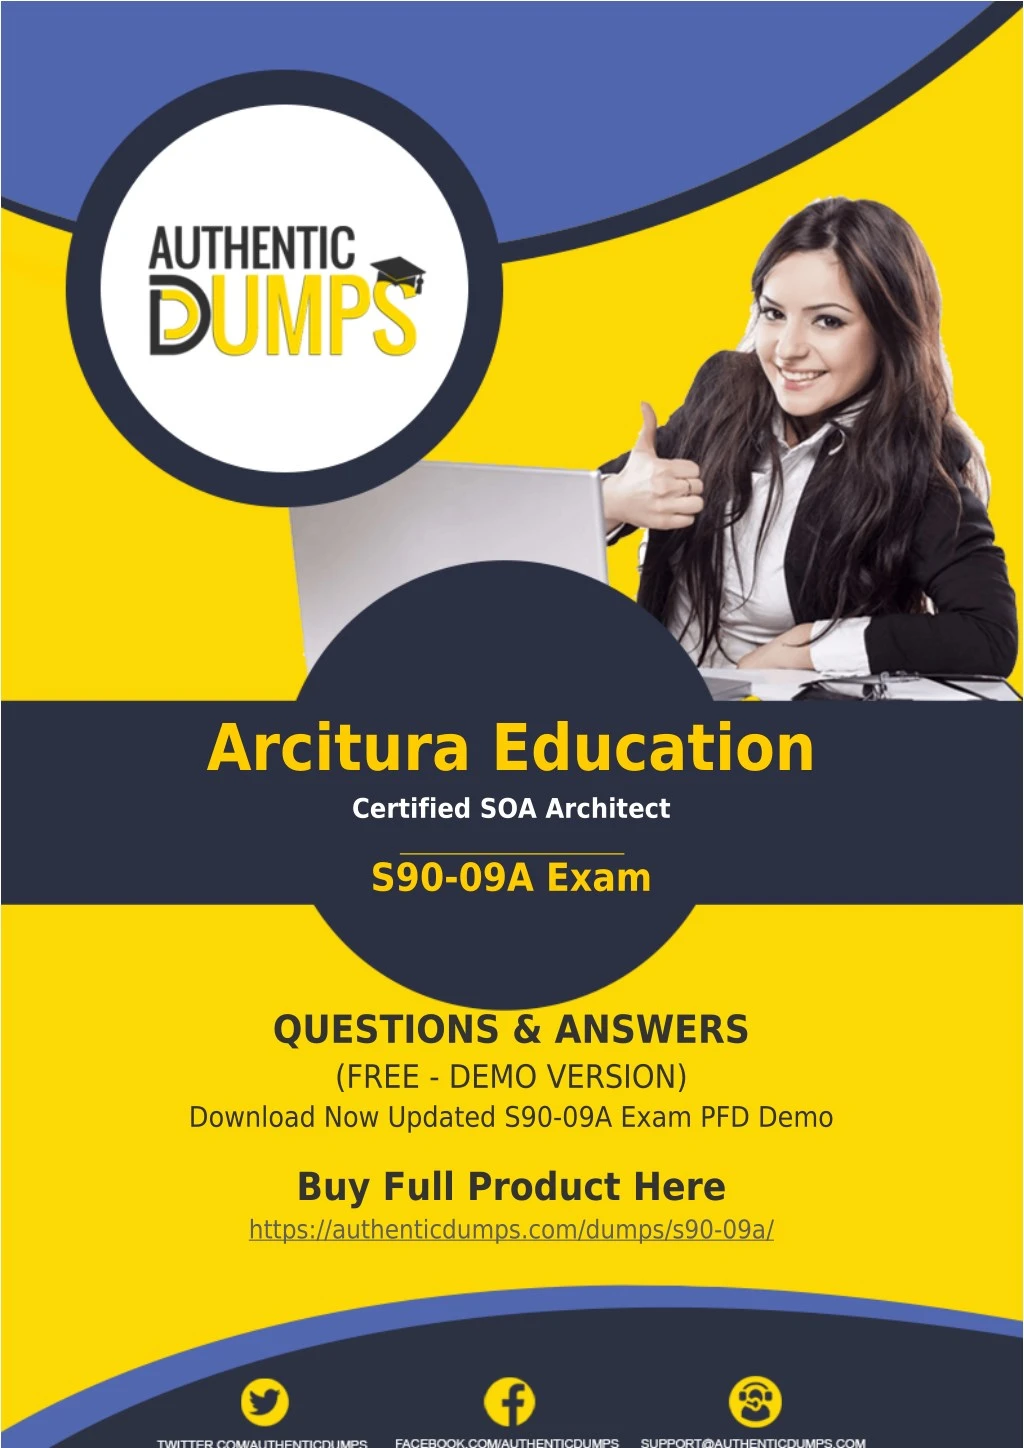 arcitura education certified soa architect